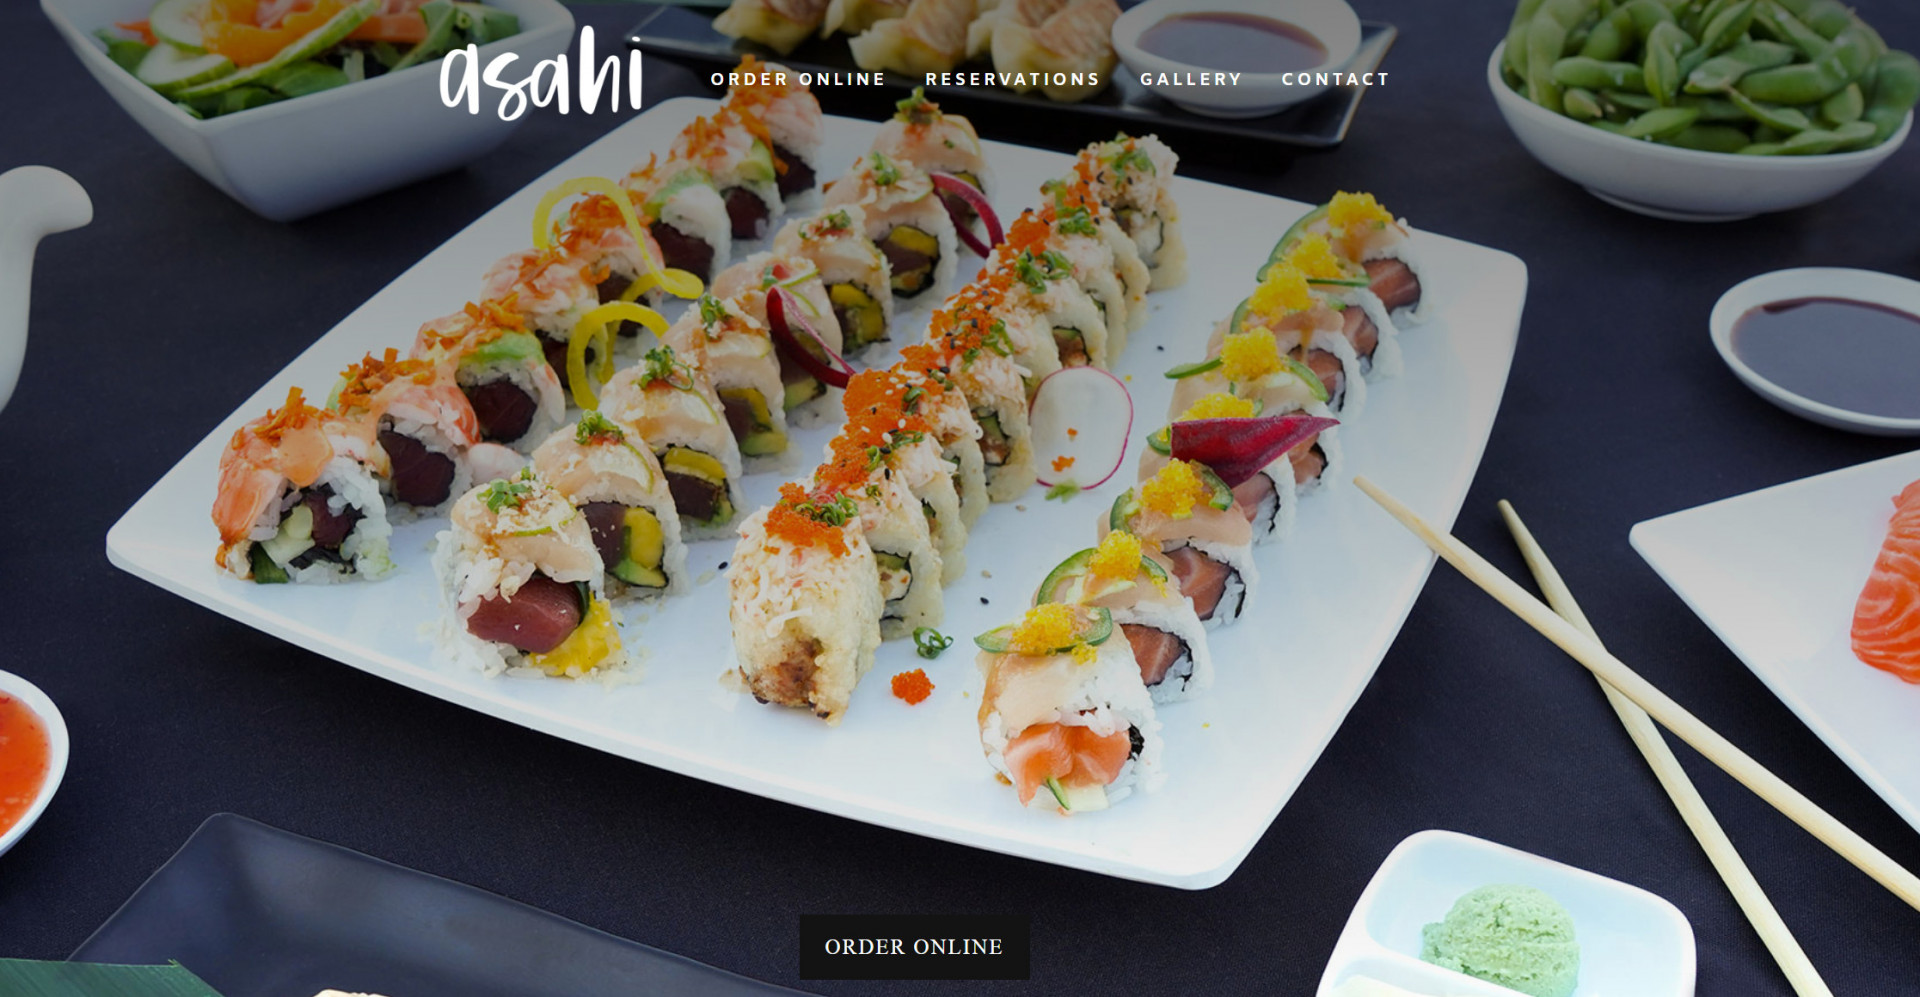 An example of the best restaurant website design for sushi restaurants